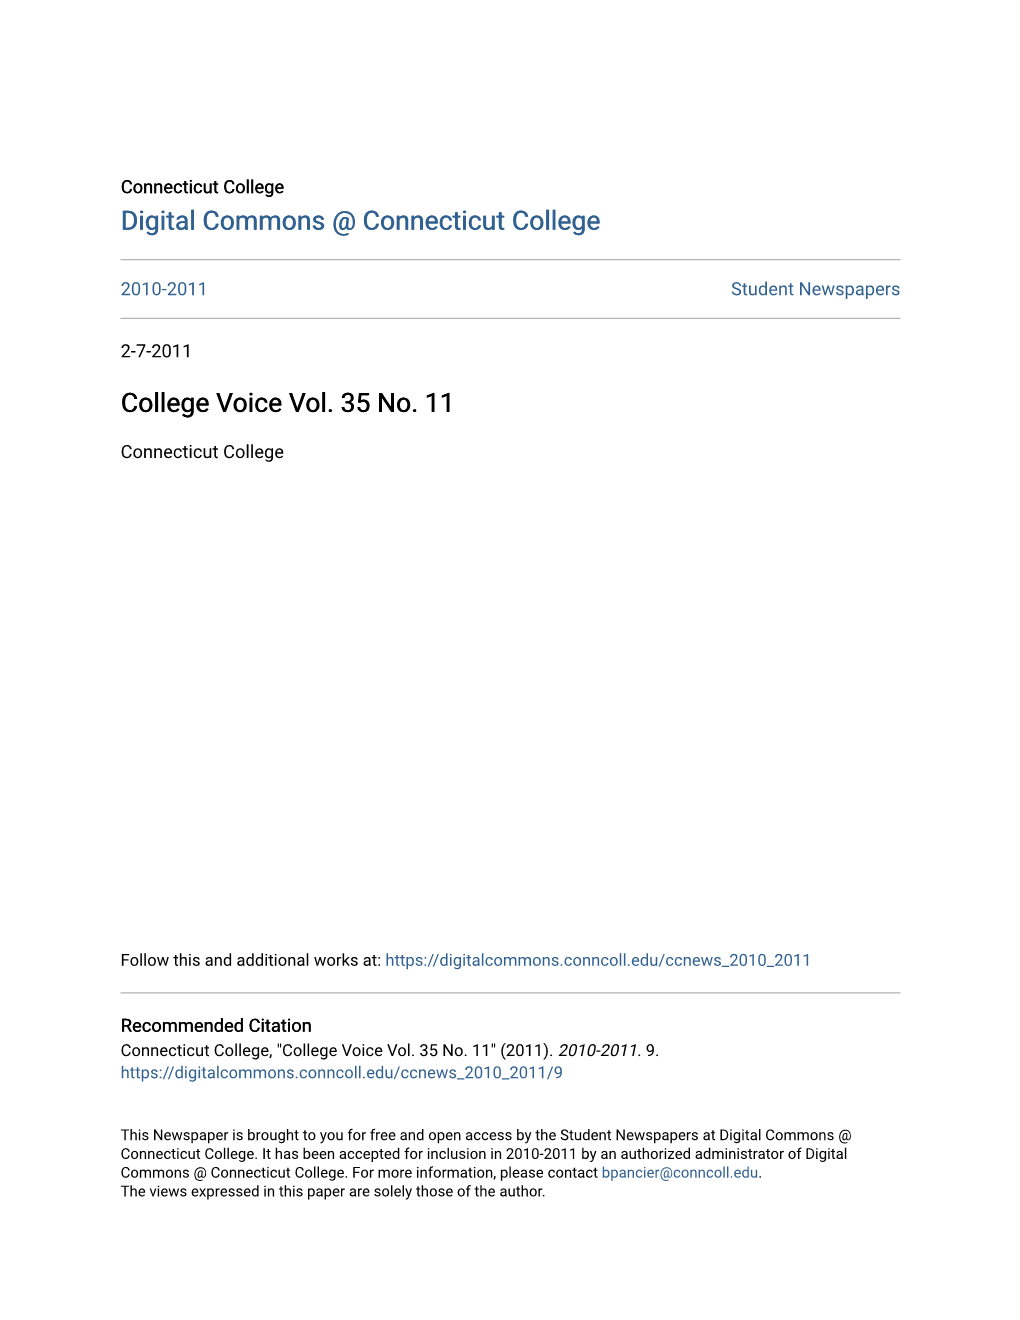 College Voice Vol. 35 No. 11